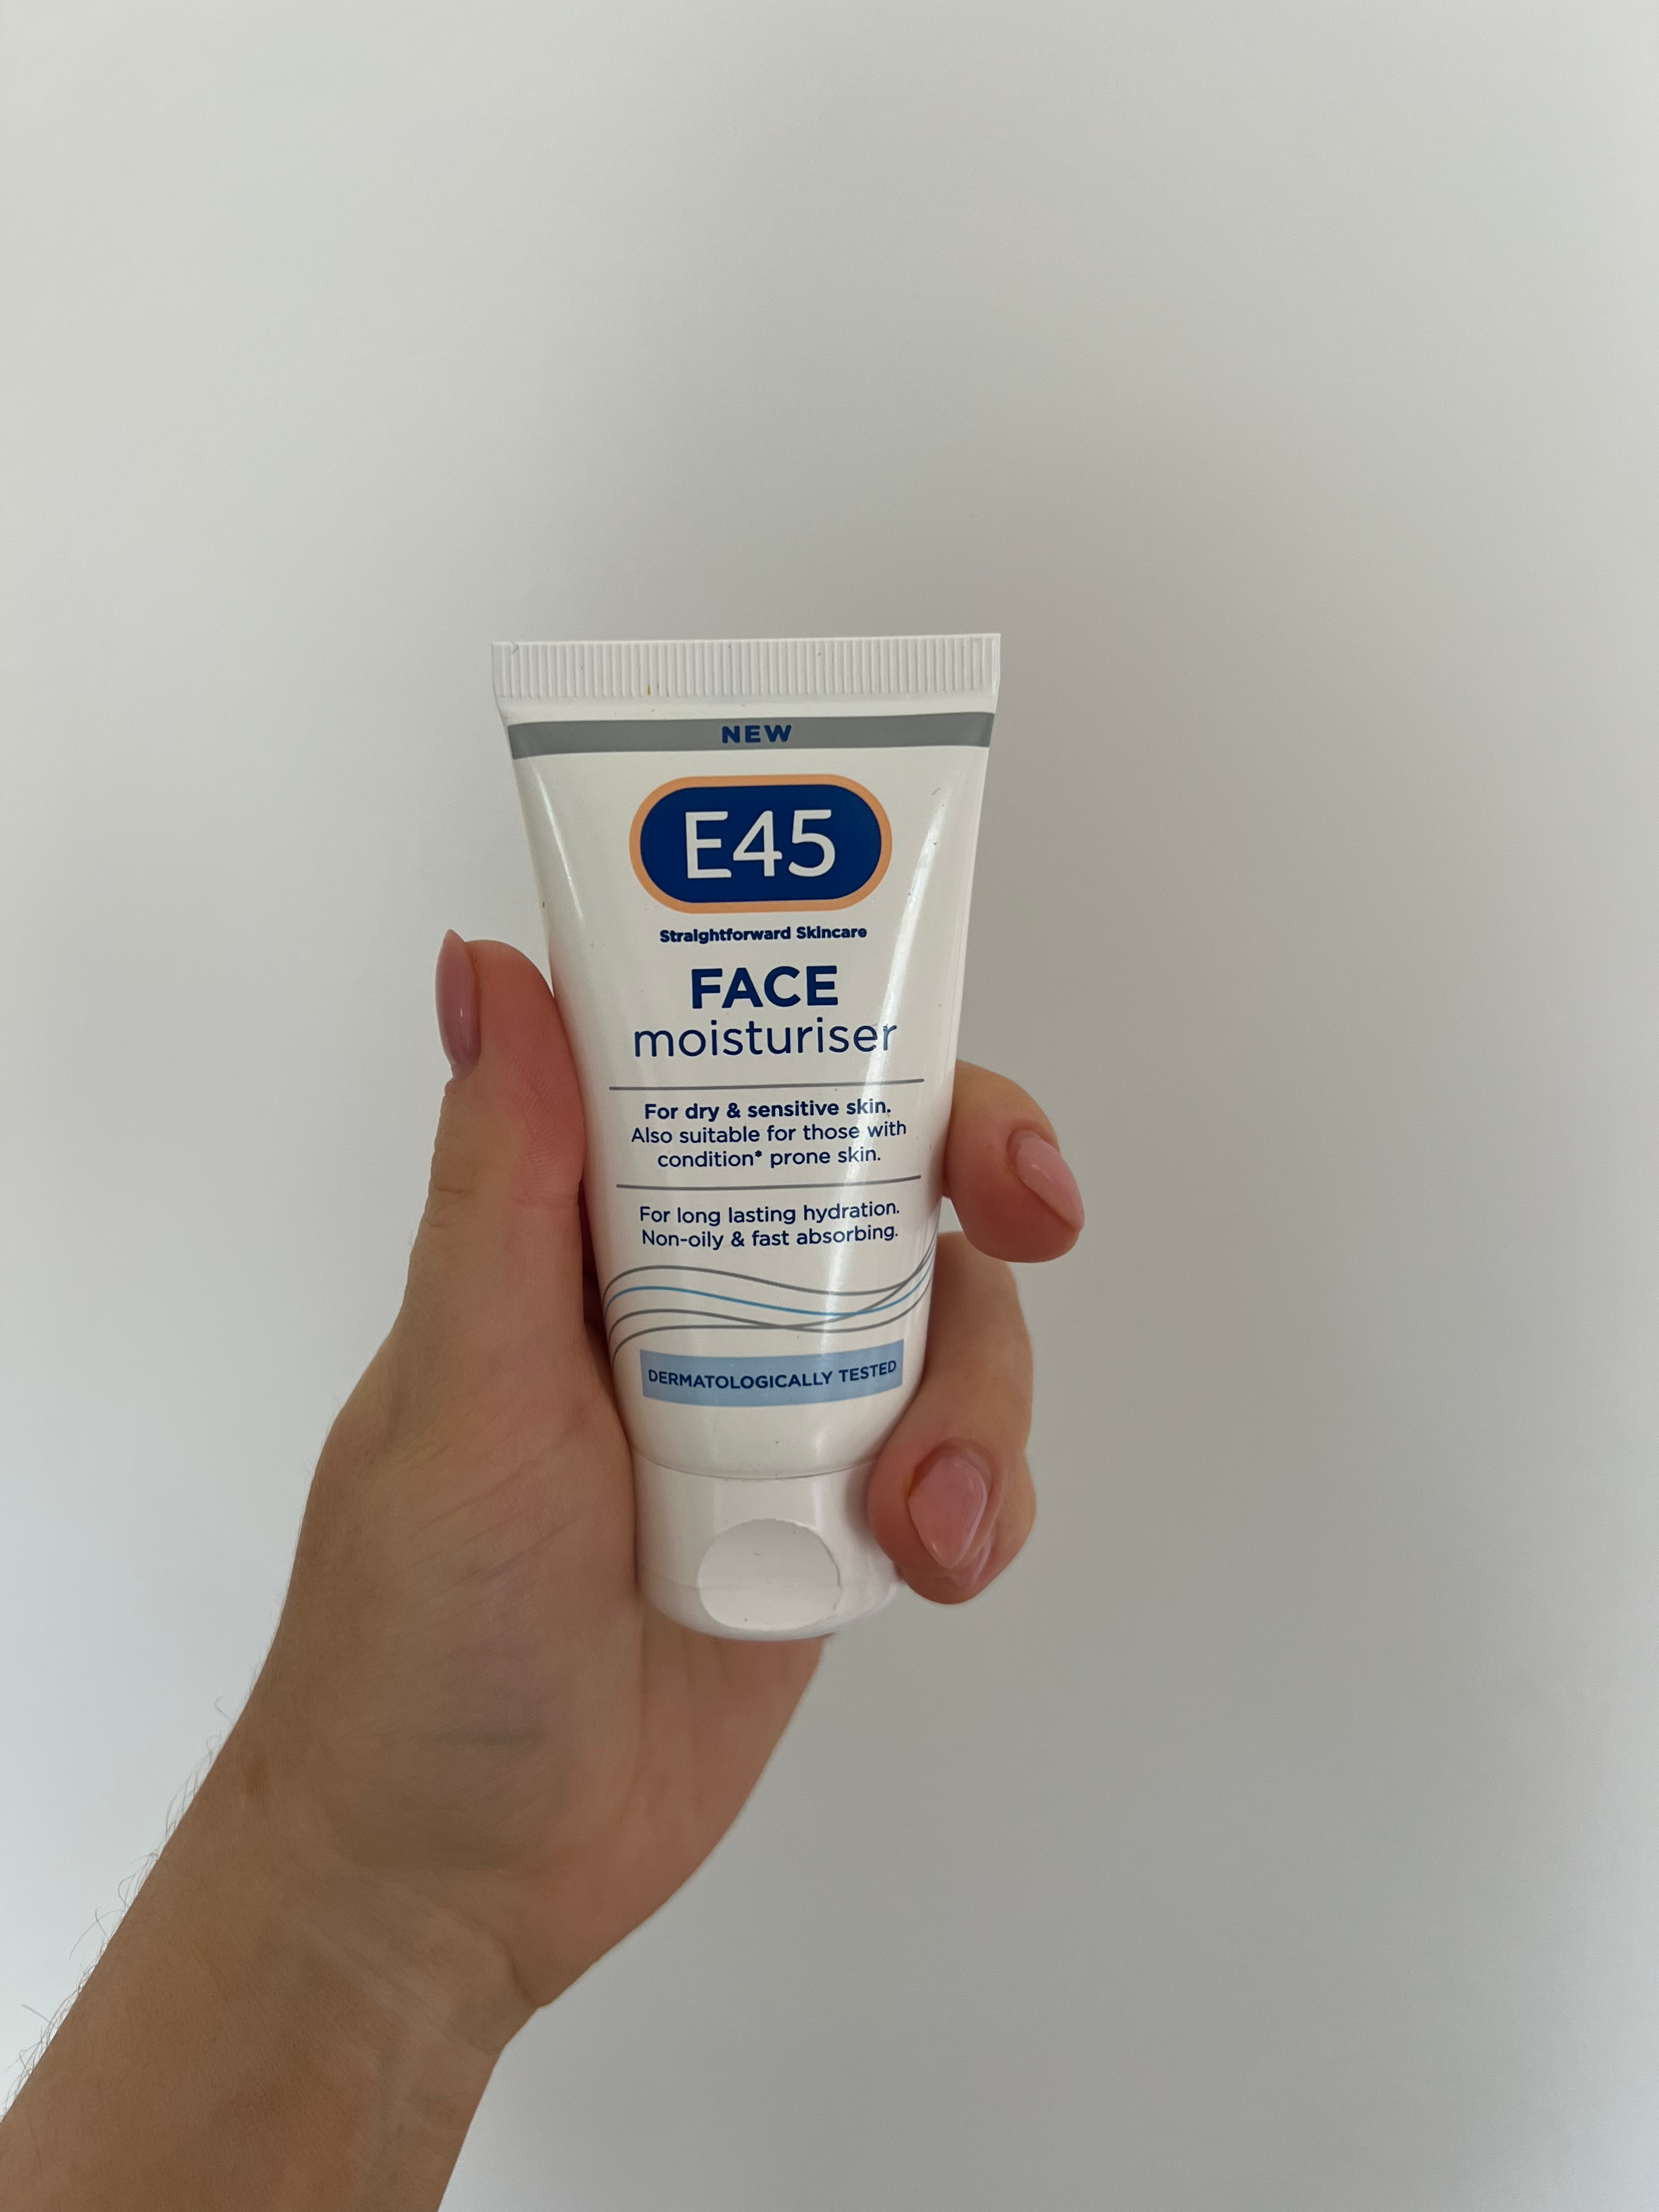 E45 face moisturiser